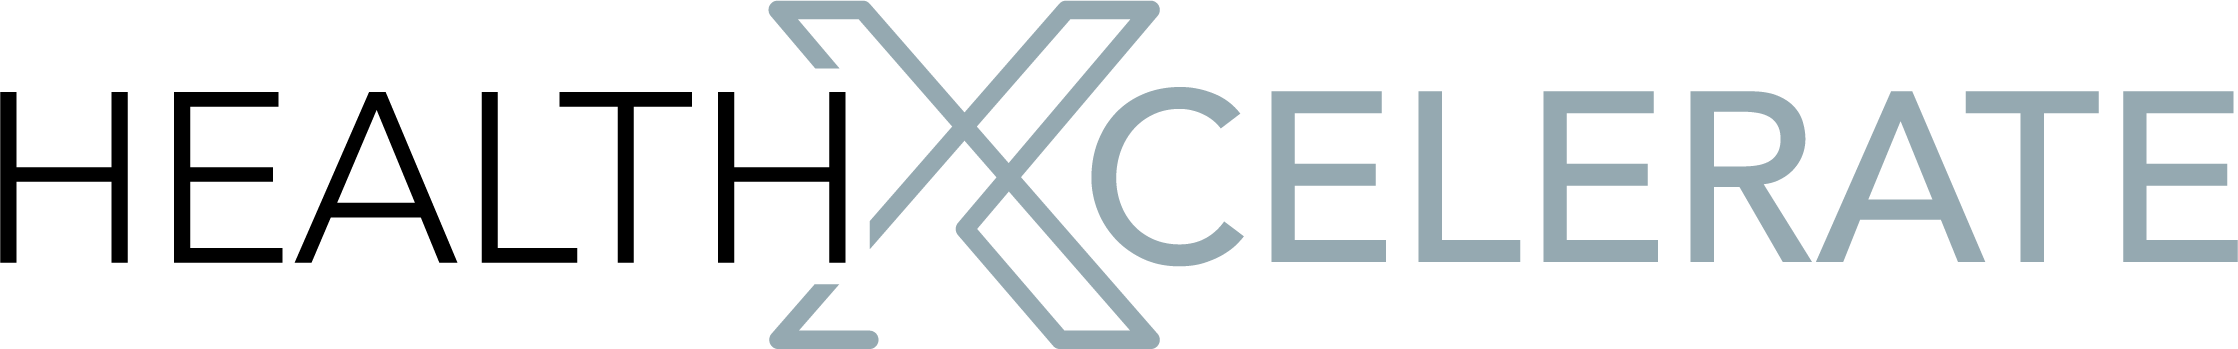 HealthXcelerate Logo.